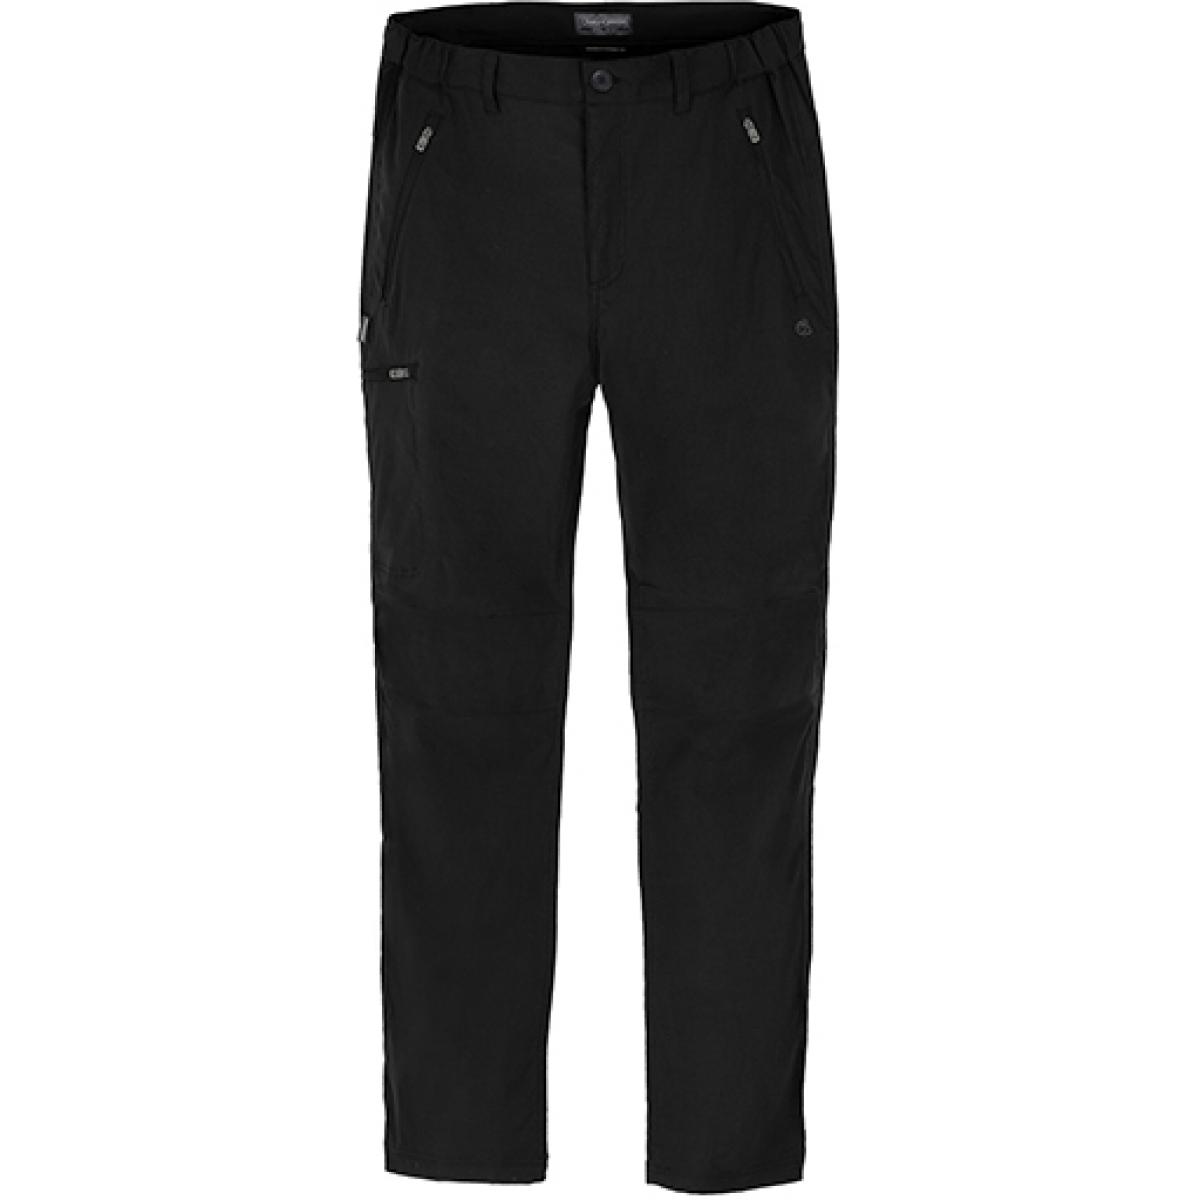 Hersteller: Craghoppers Expert Herstellernummer: CEJ003 Artikelbezeichnung: Expert Kiwi Pro Stretch Trousers - Hose Farbe: Black